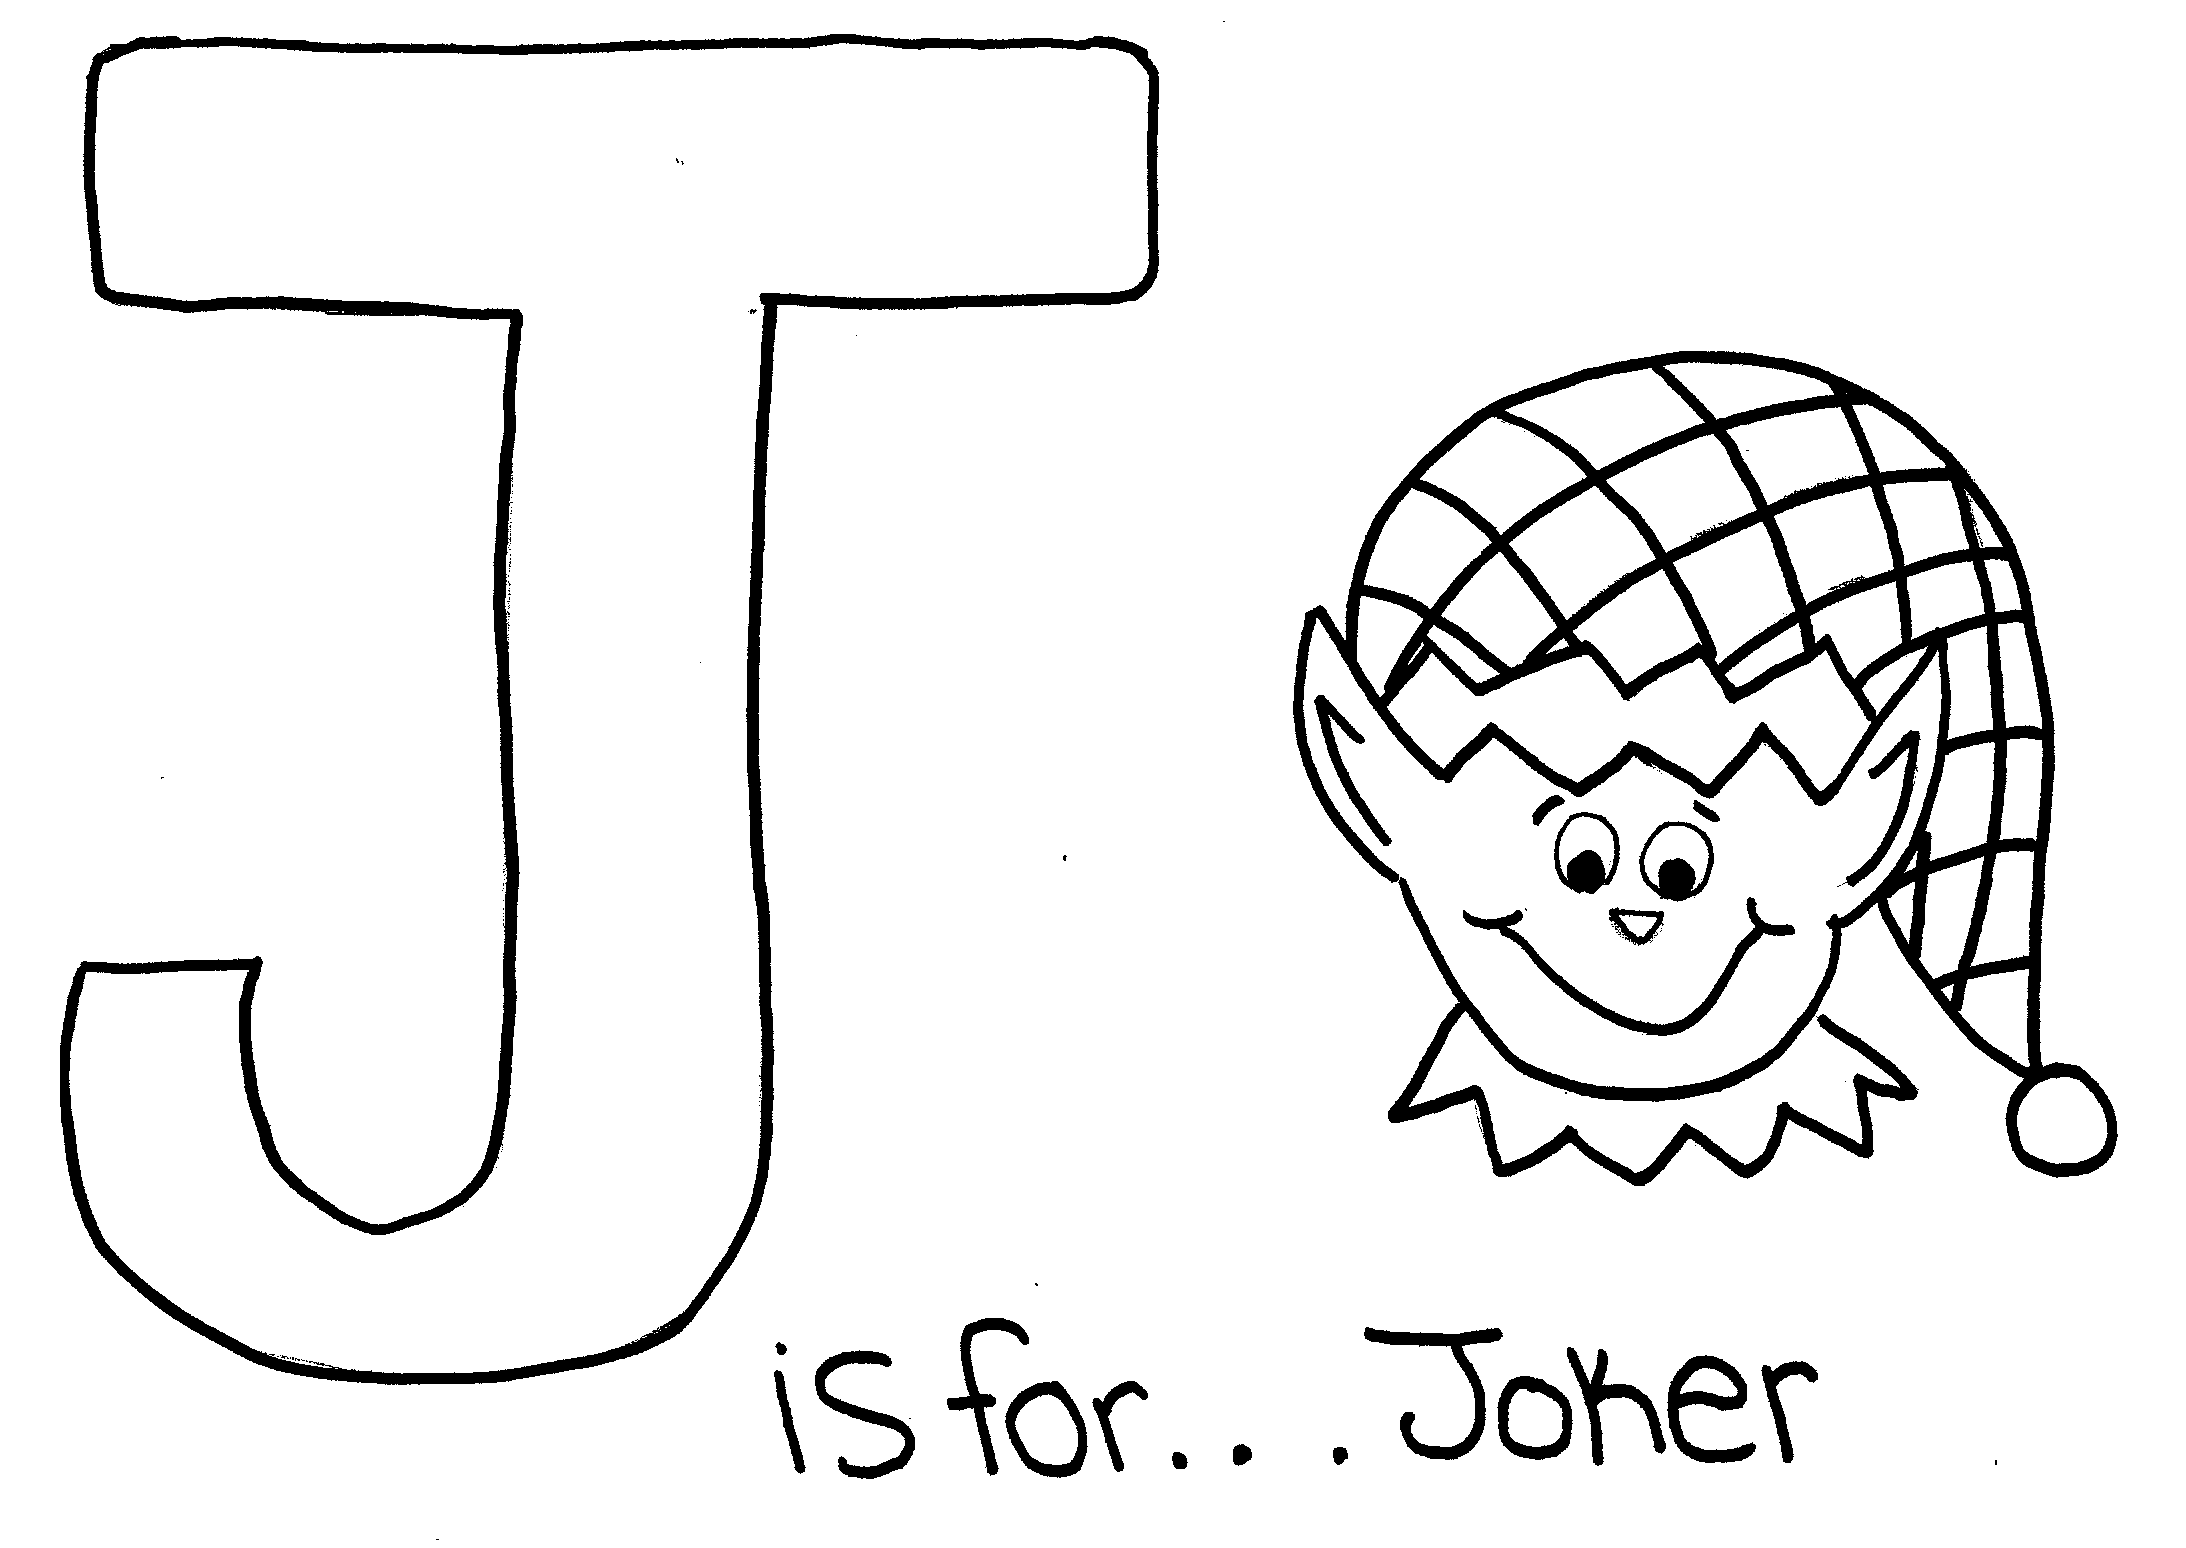 Free Alphabet coloring page Letter J